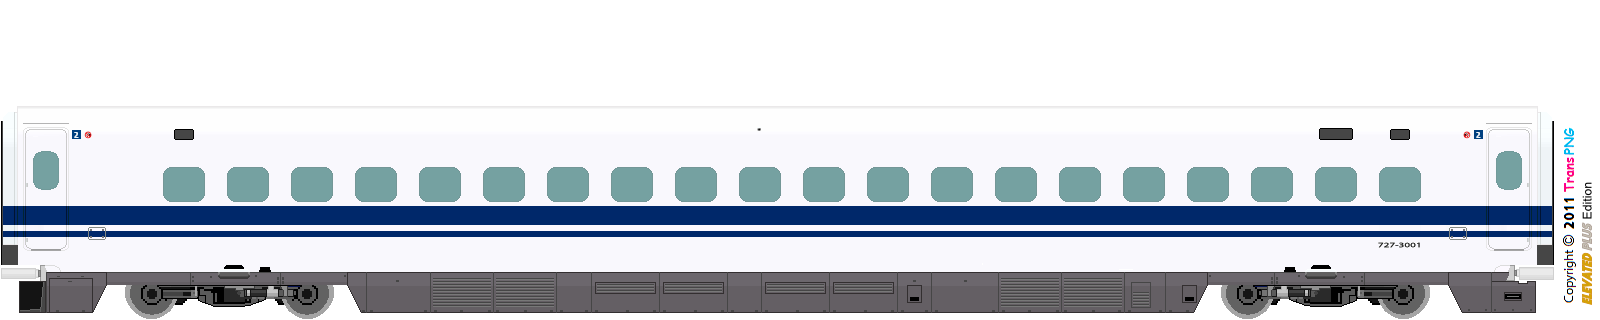 [9012] West Japan Railway 52287846059_0043b1ae8e_o